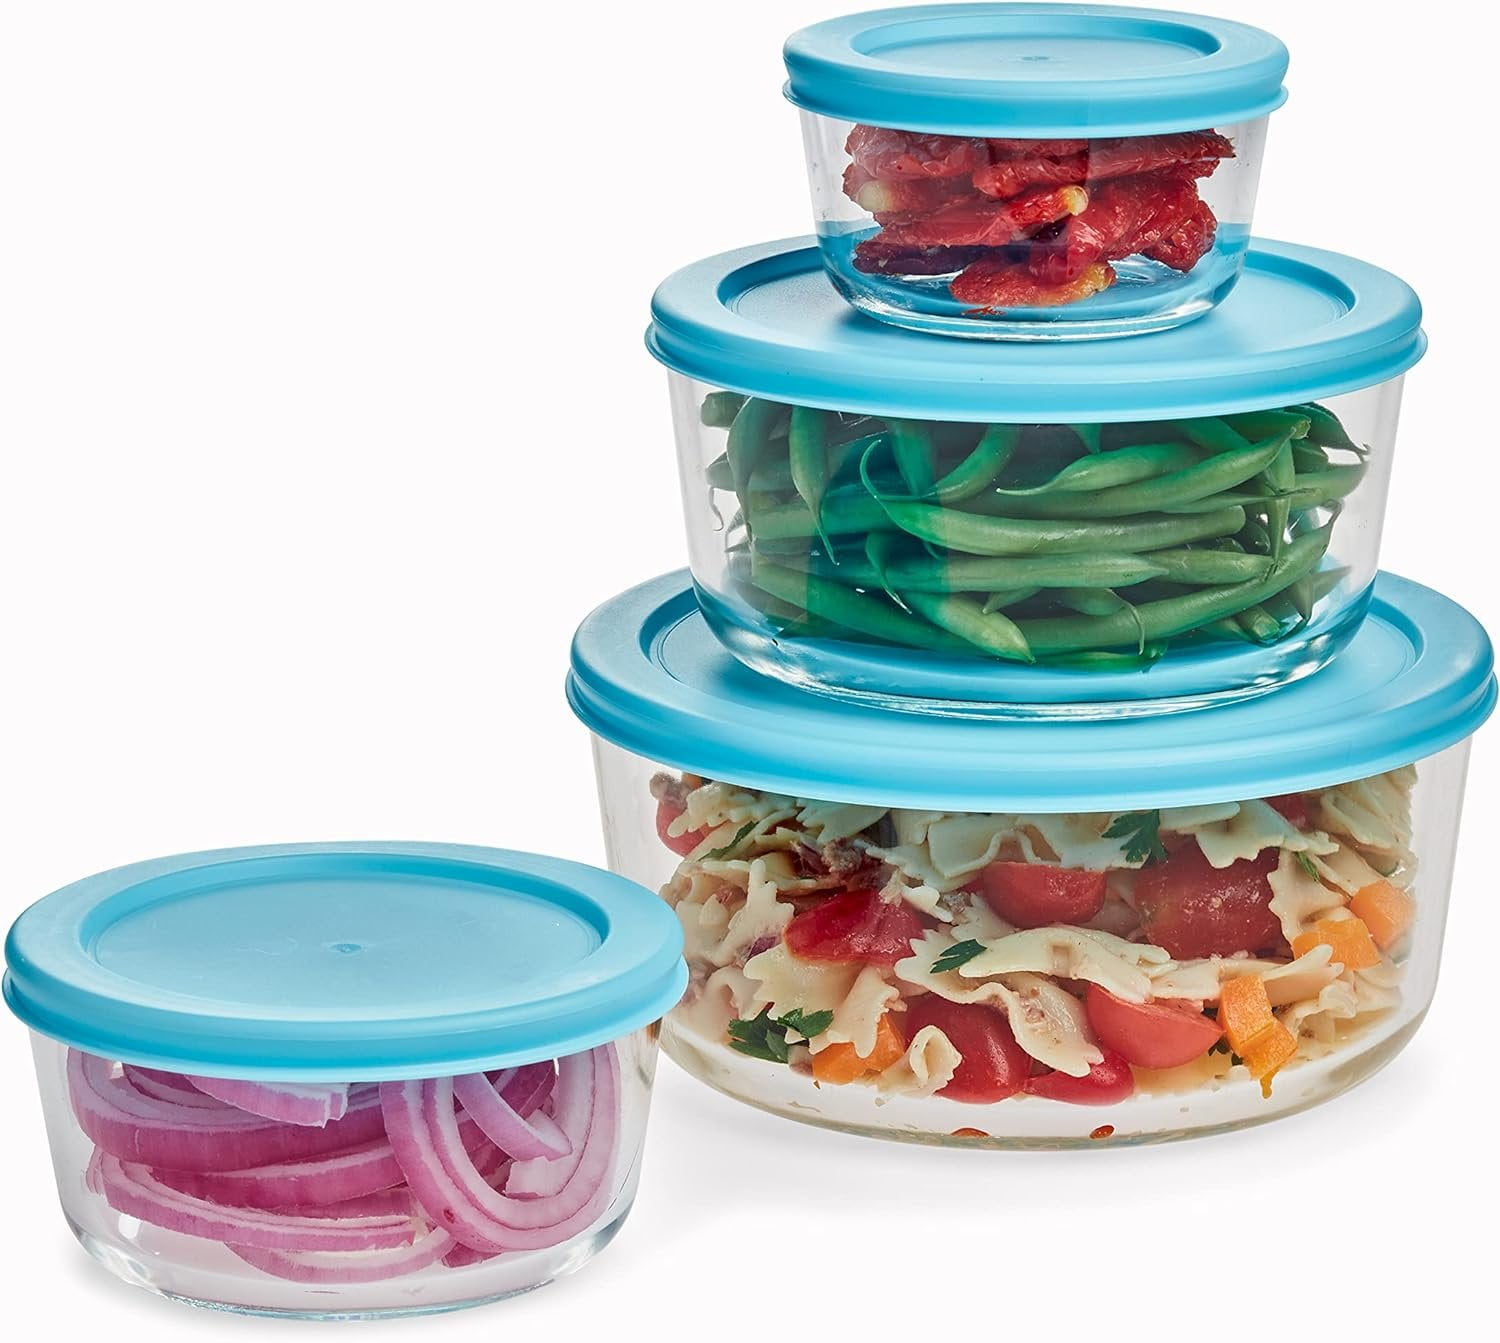 EatNeat 5-Piece Glass Salad Bowl Set With Airtight Locking Lids